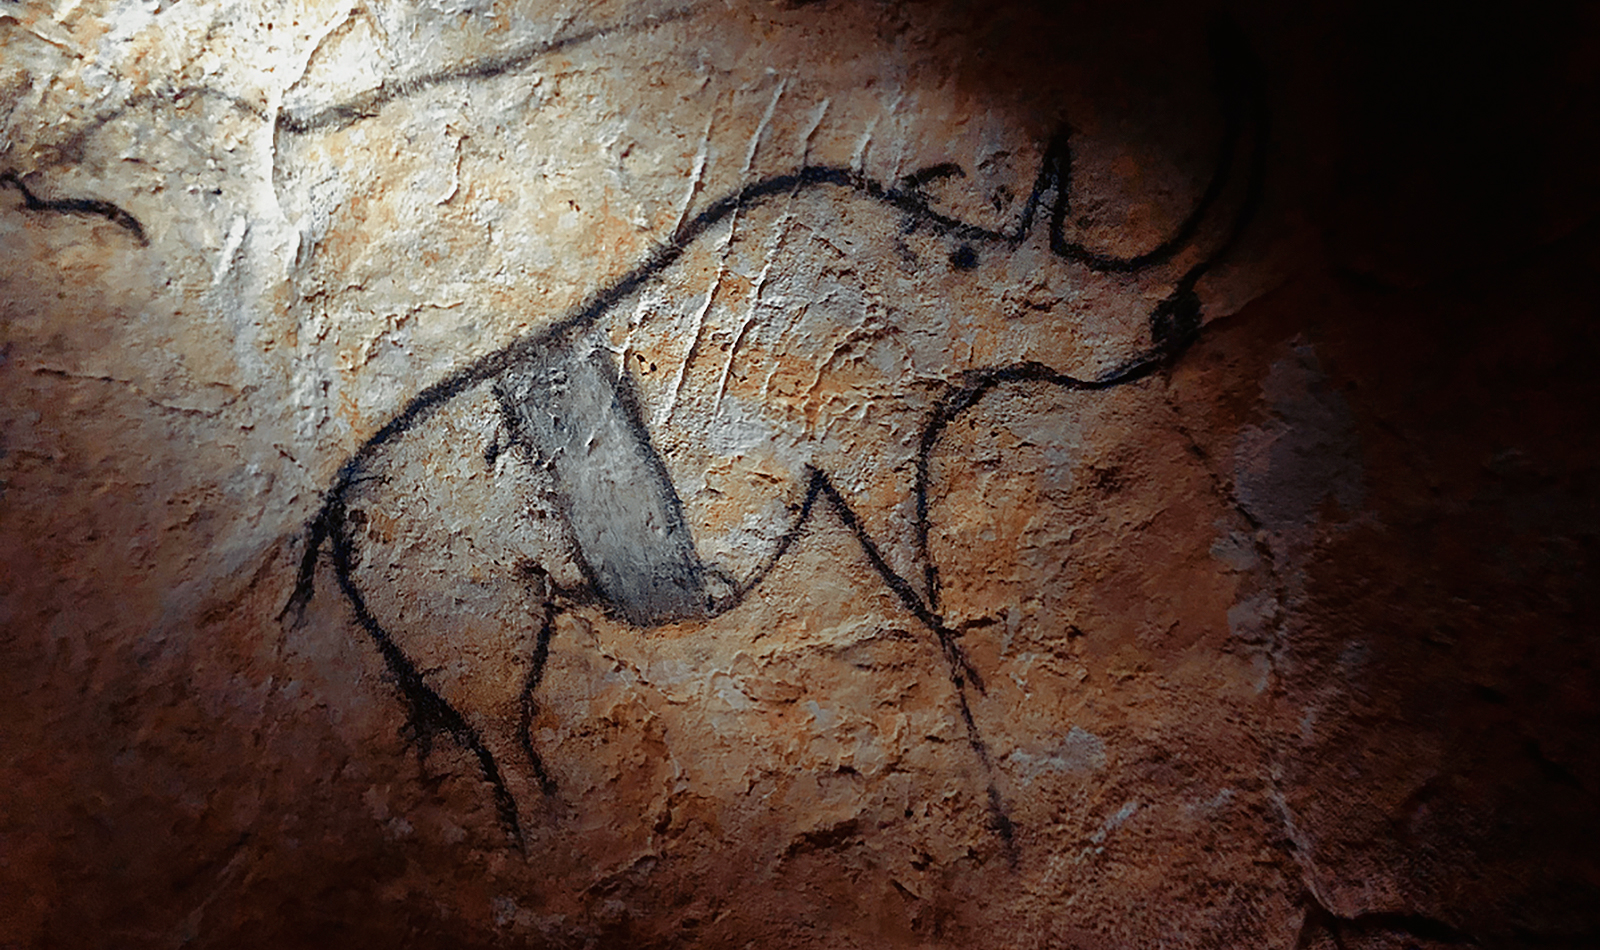 Rhinoceroses Rhinocerose Chauvet Cave Paintings Rock Art France Bradshaw Foundation